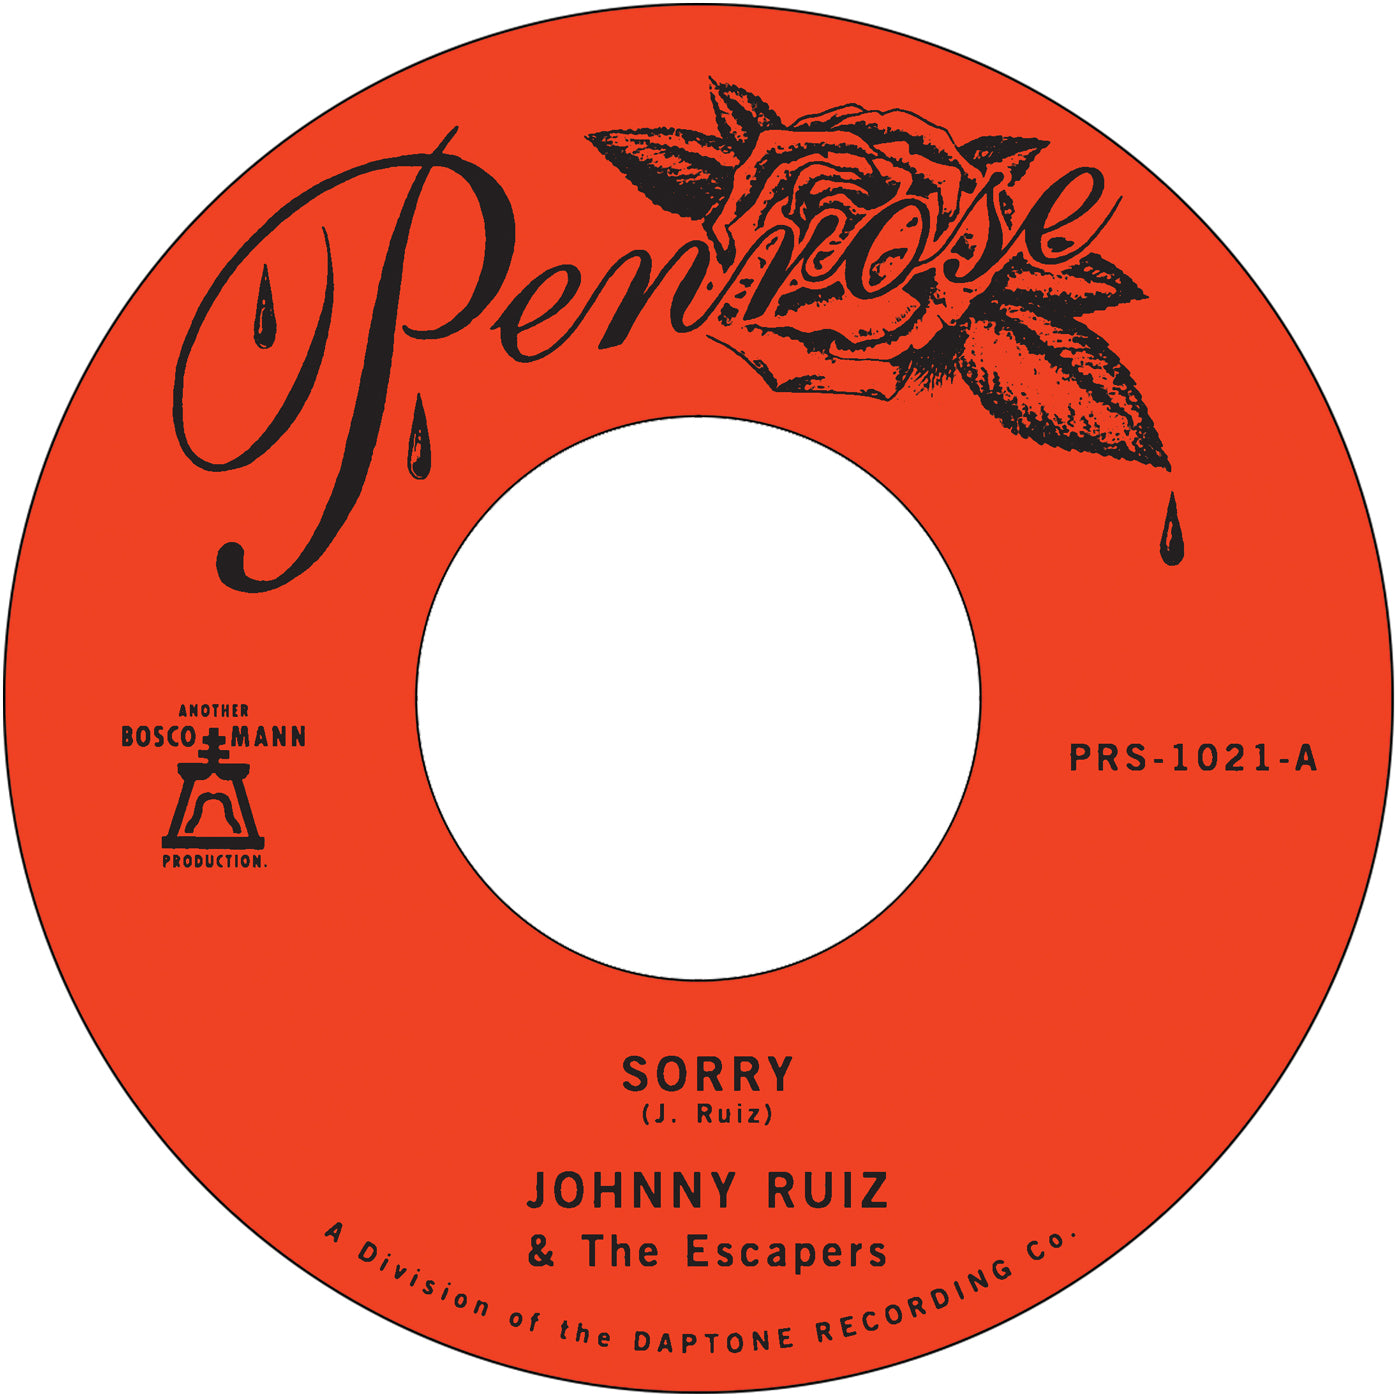 Johnny Ruiz & The Escapers - "Sorry" / "Prettiest Girl" 45